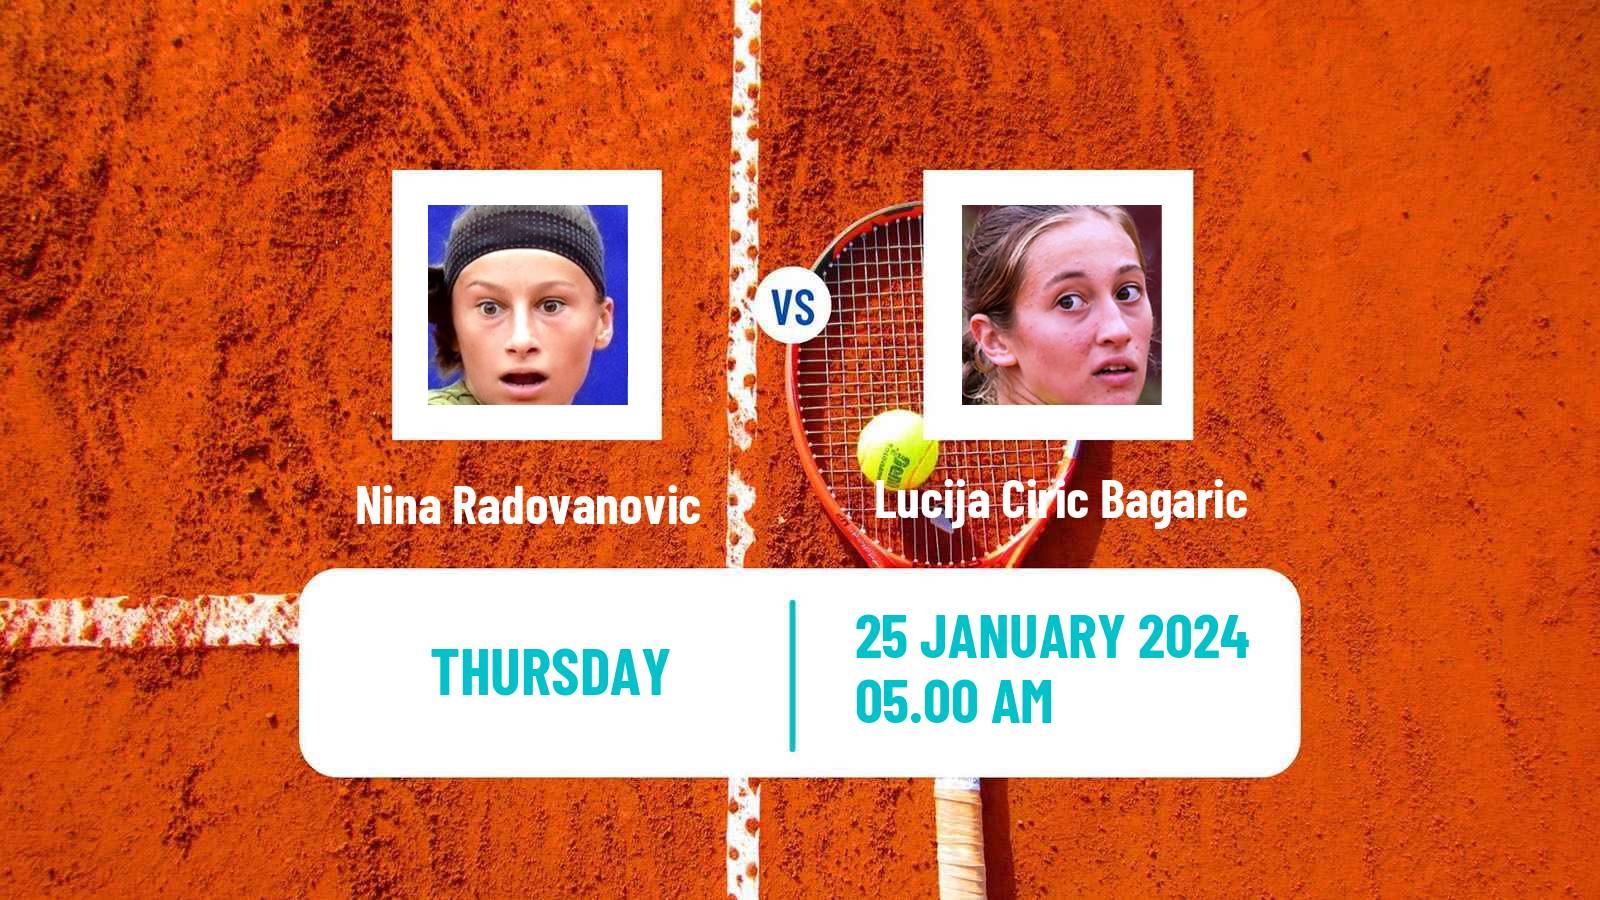 Tennis ITF W35 Monastir 2 Women Nina Radovanovic - Lucija Ciric Bagaric